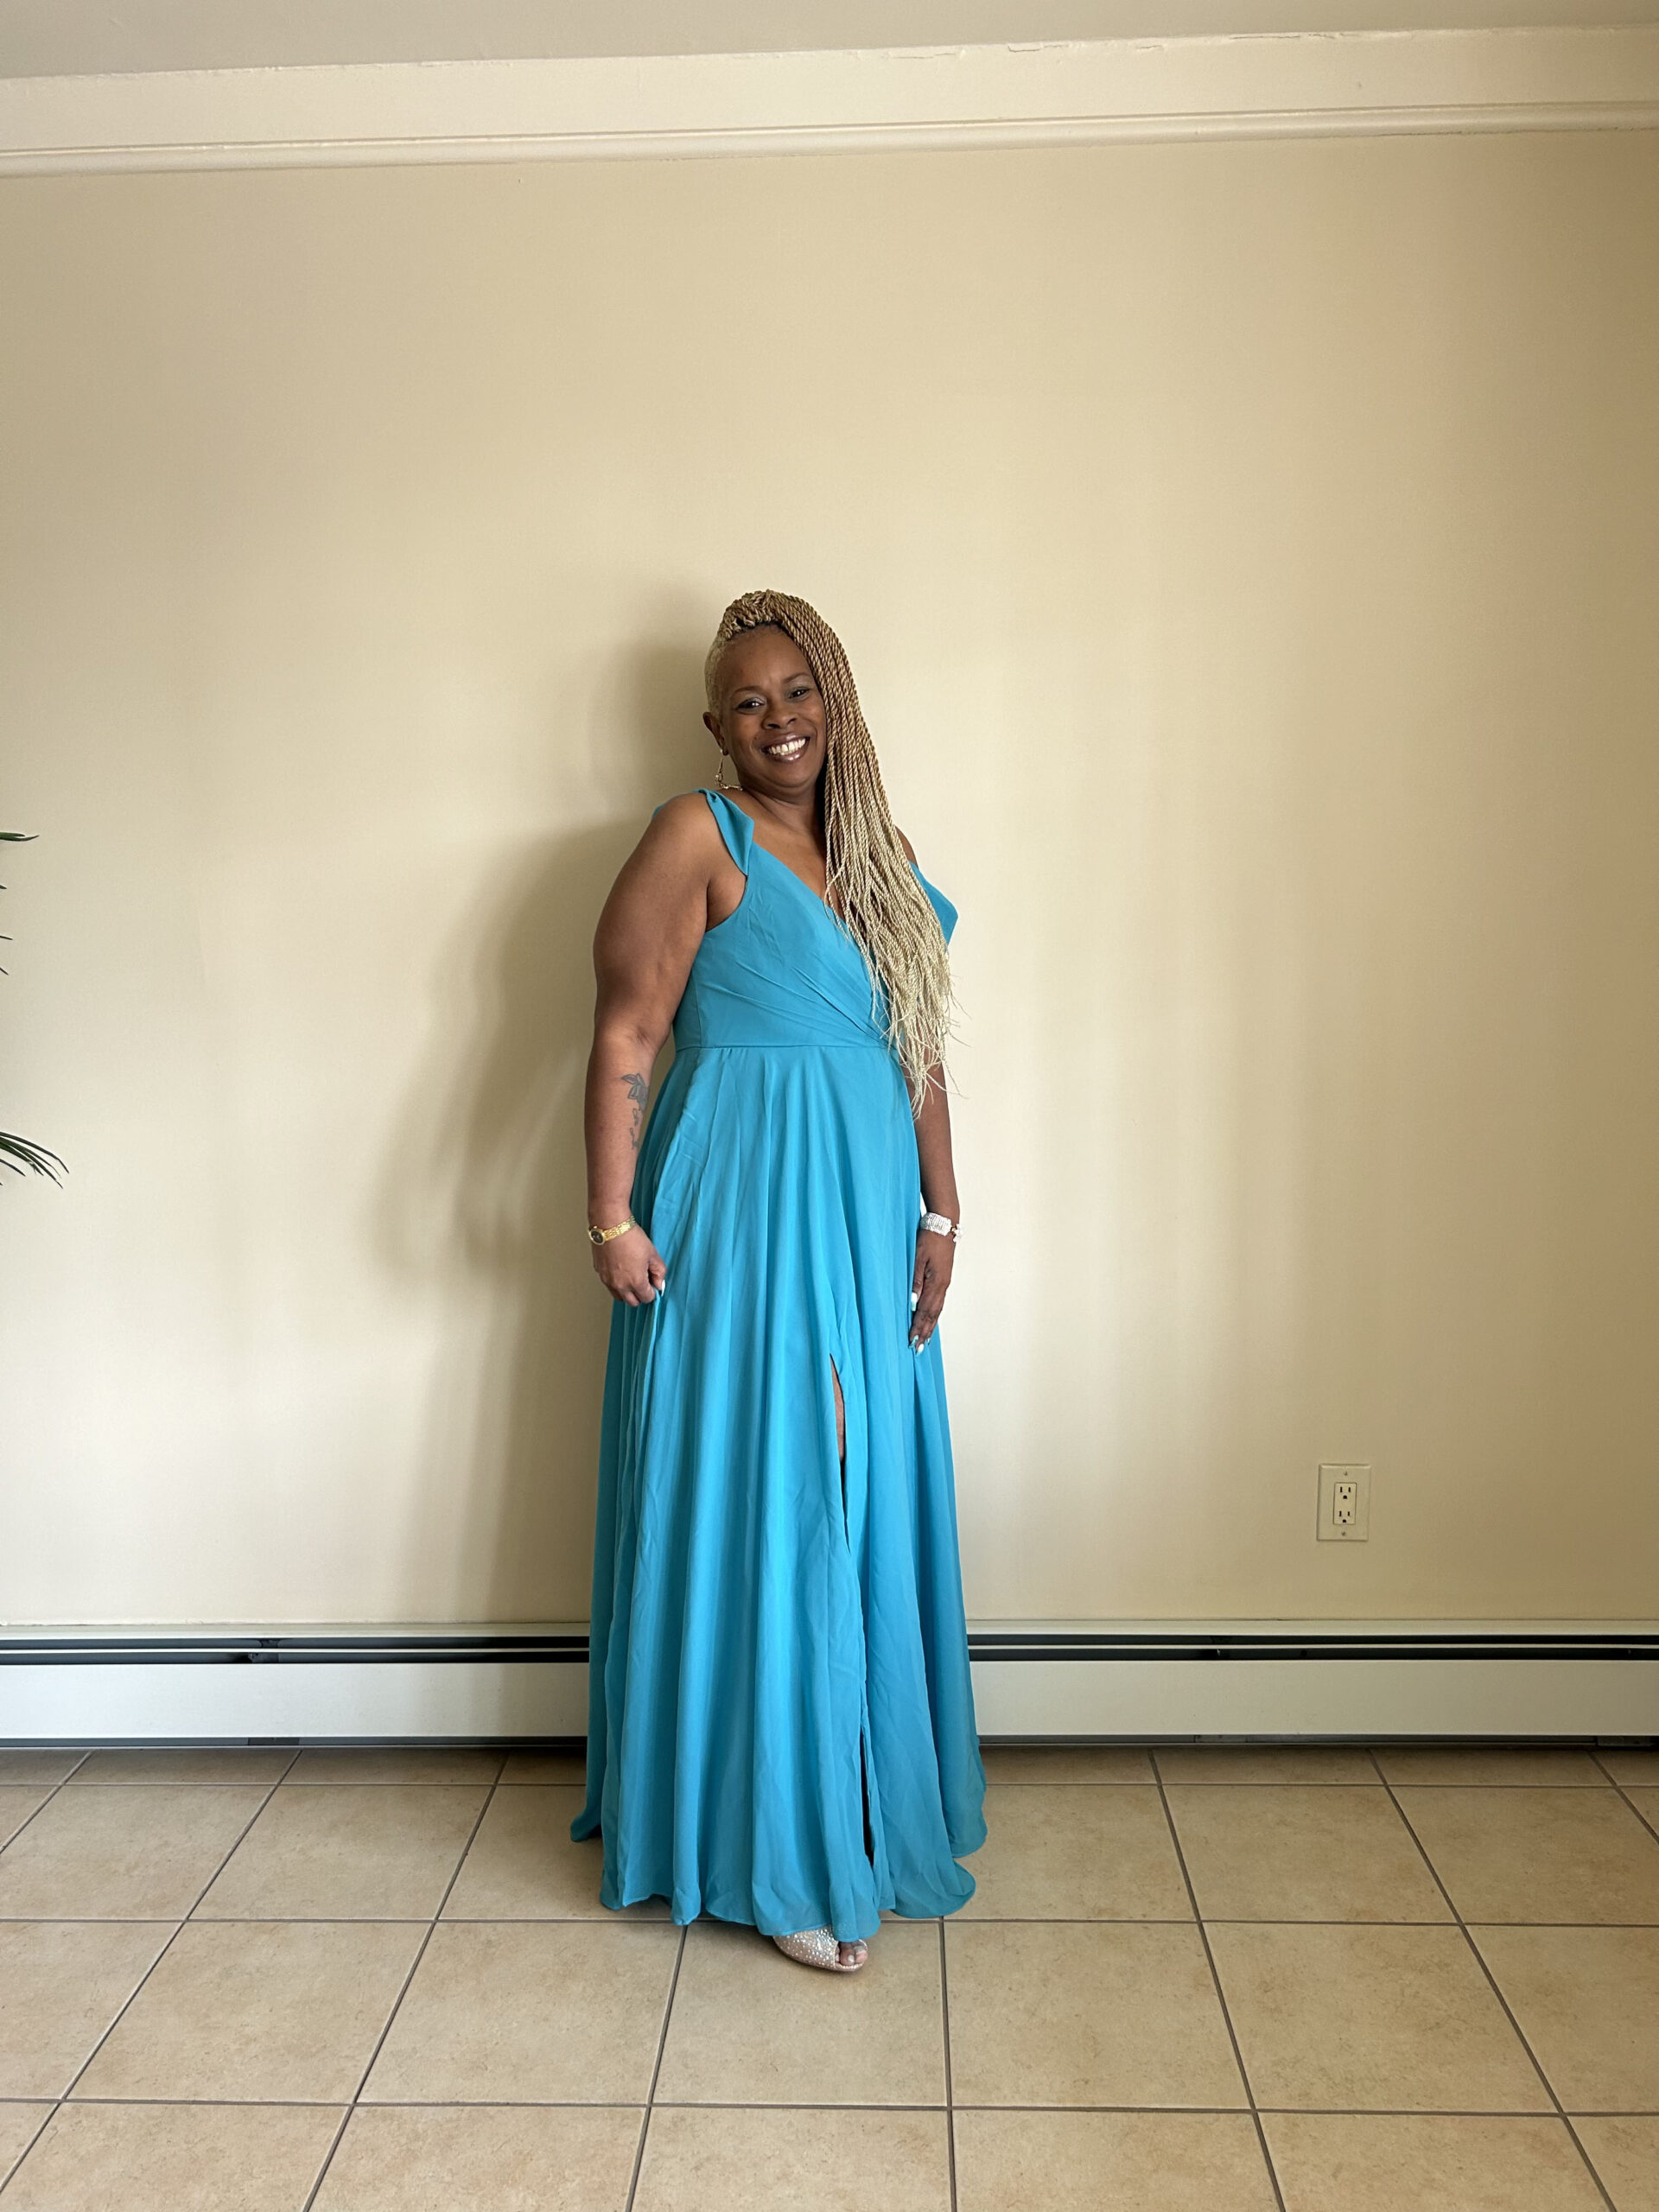 A woman wearing a blue dress